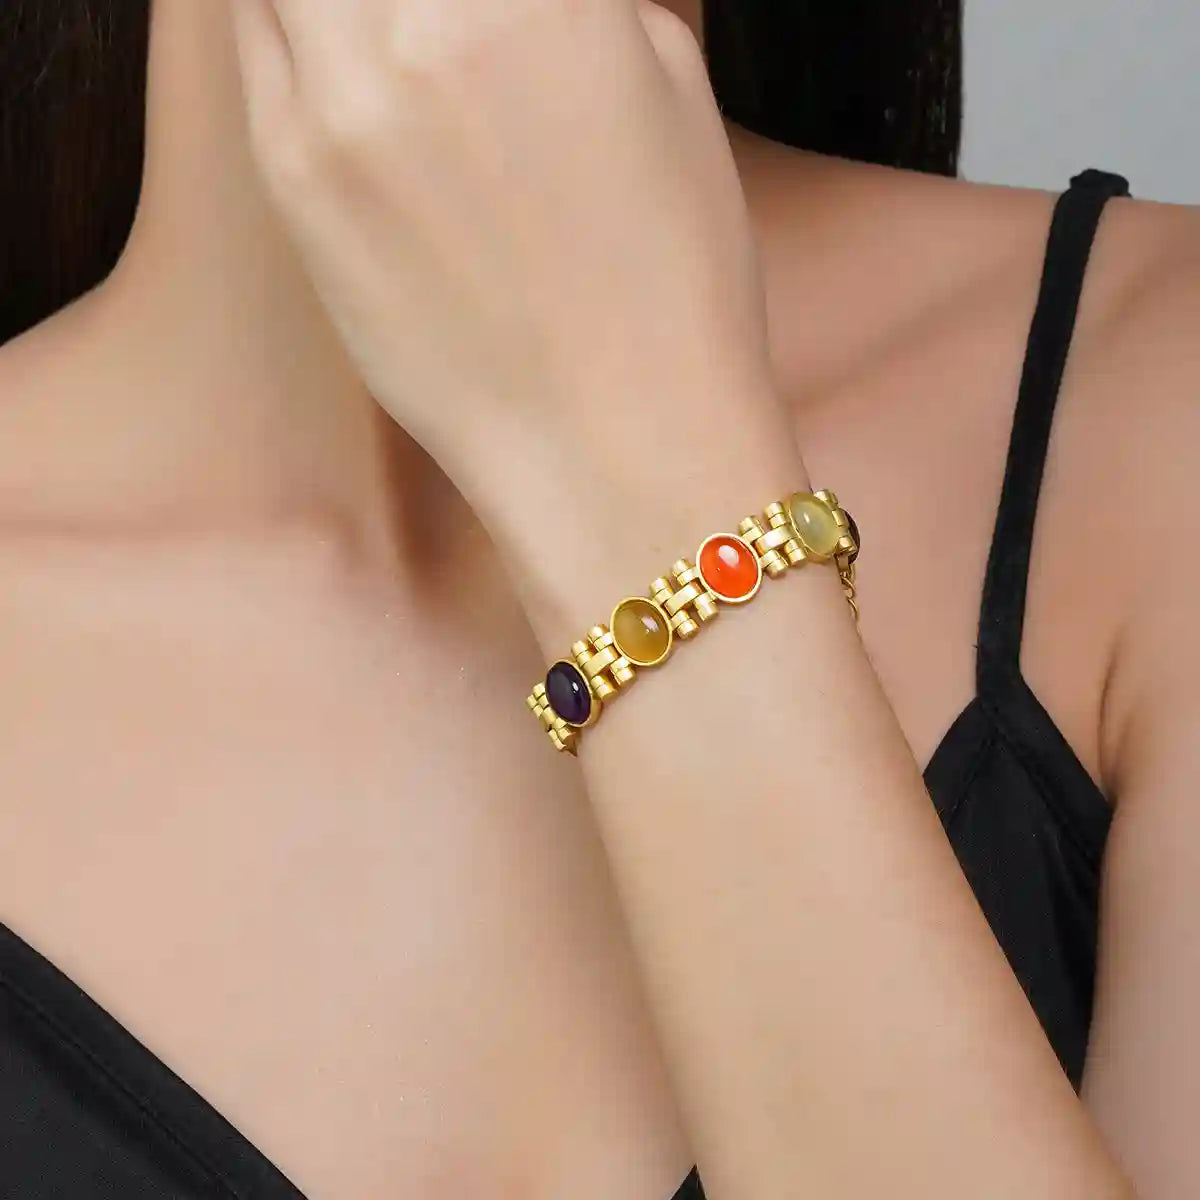 Buy Golden Watch + Chain + Bracelet - Navratna Ring + Pendant Online at  Best Price in India on Naaptol.com